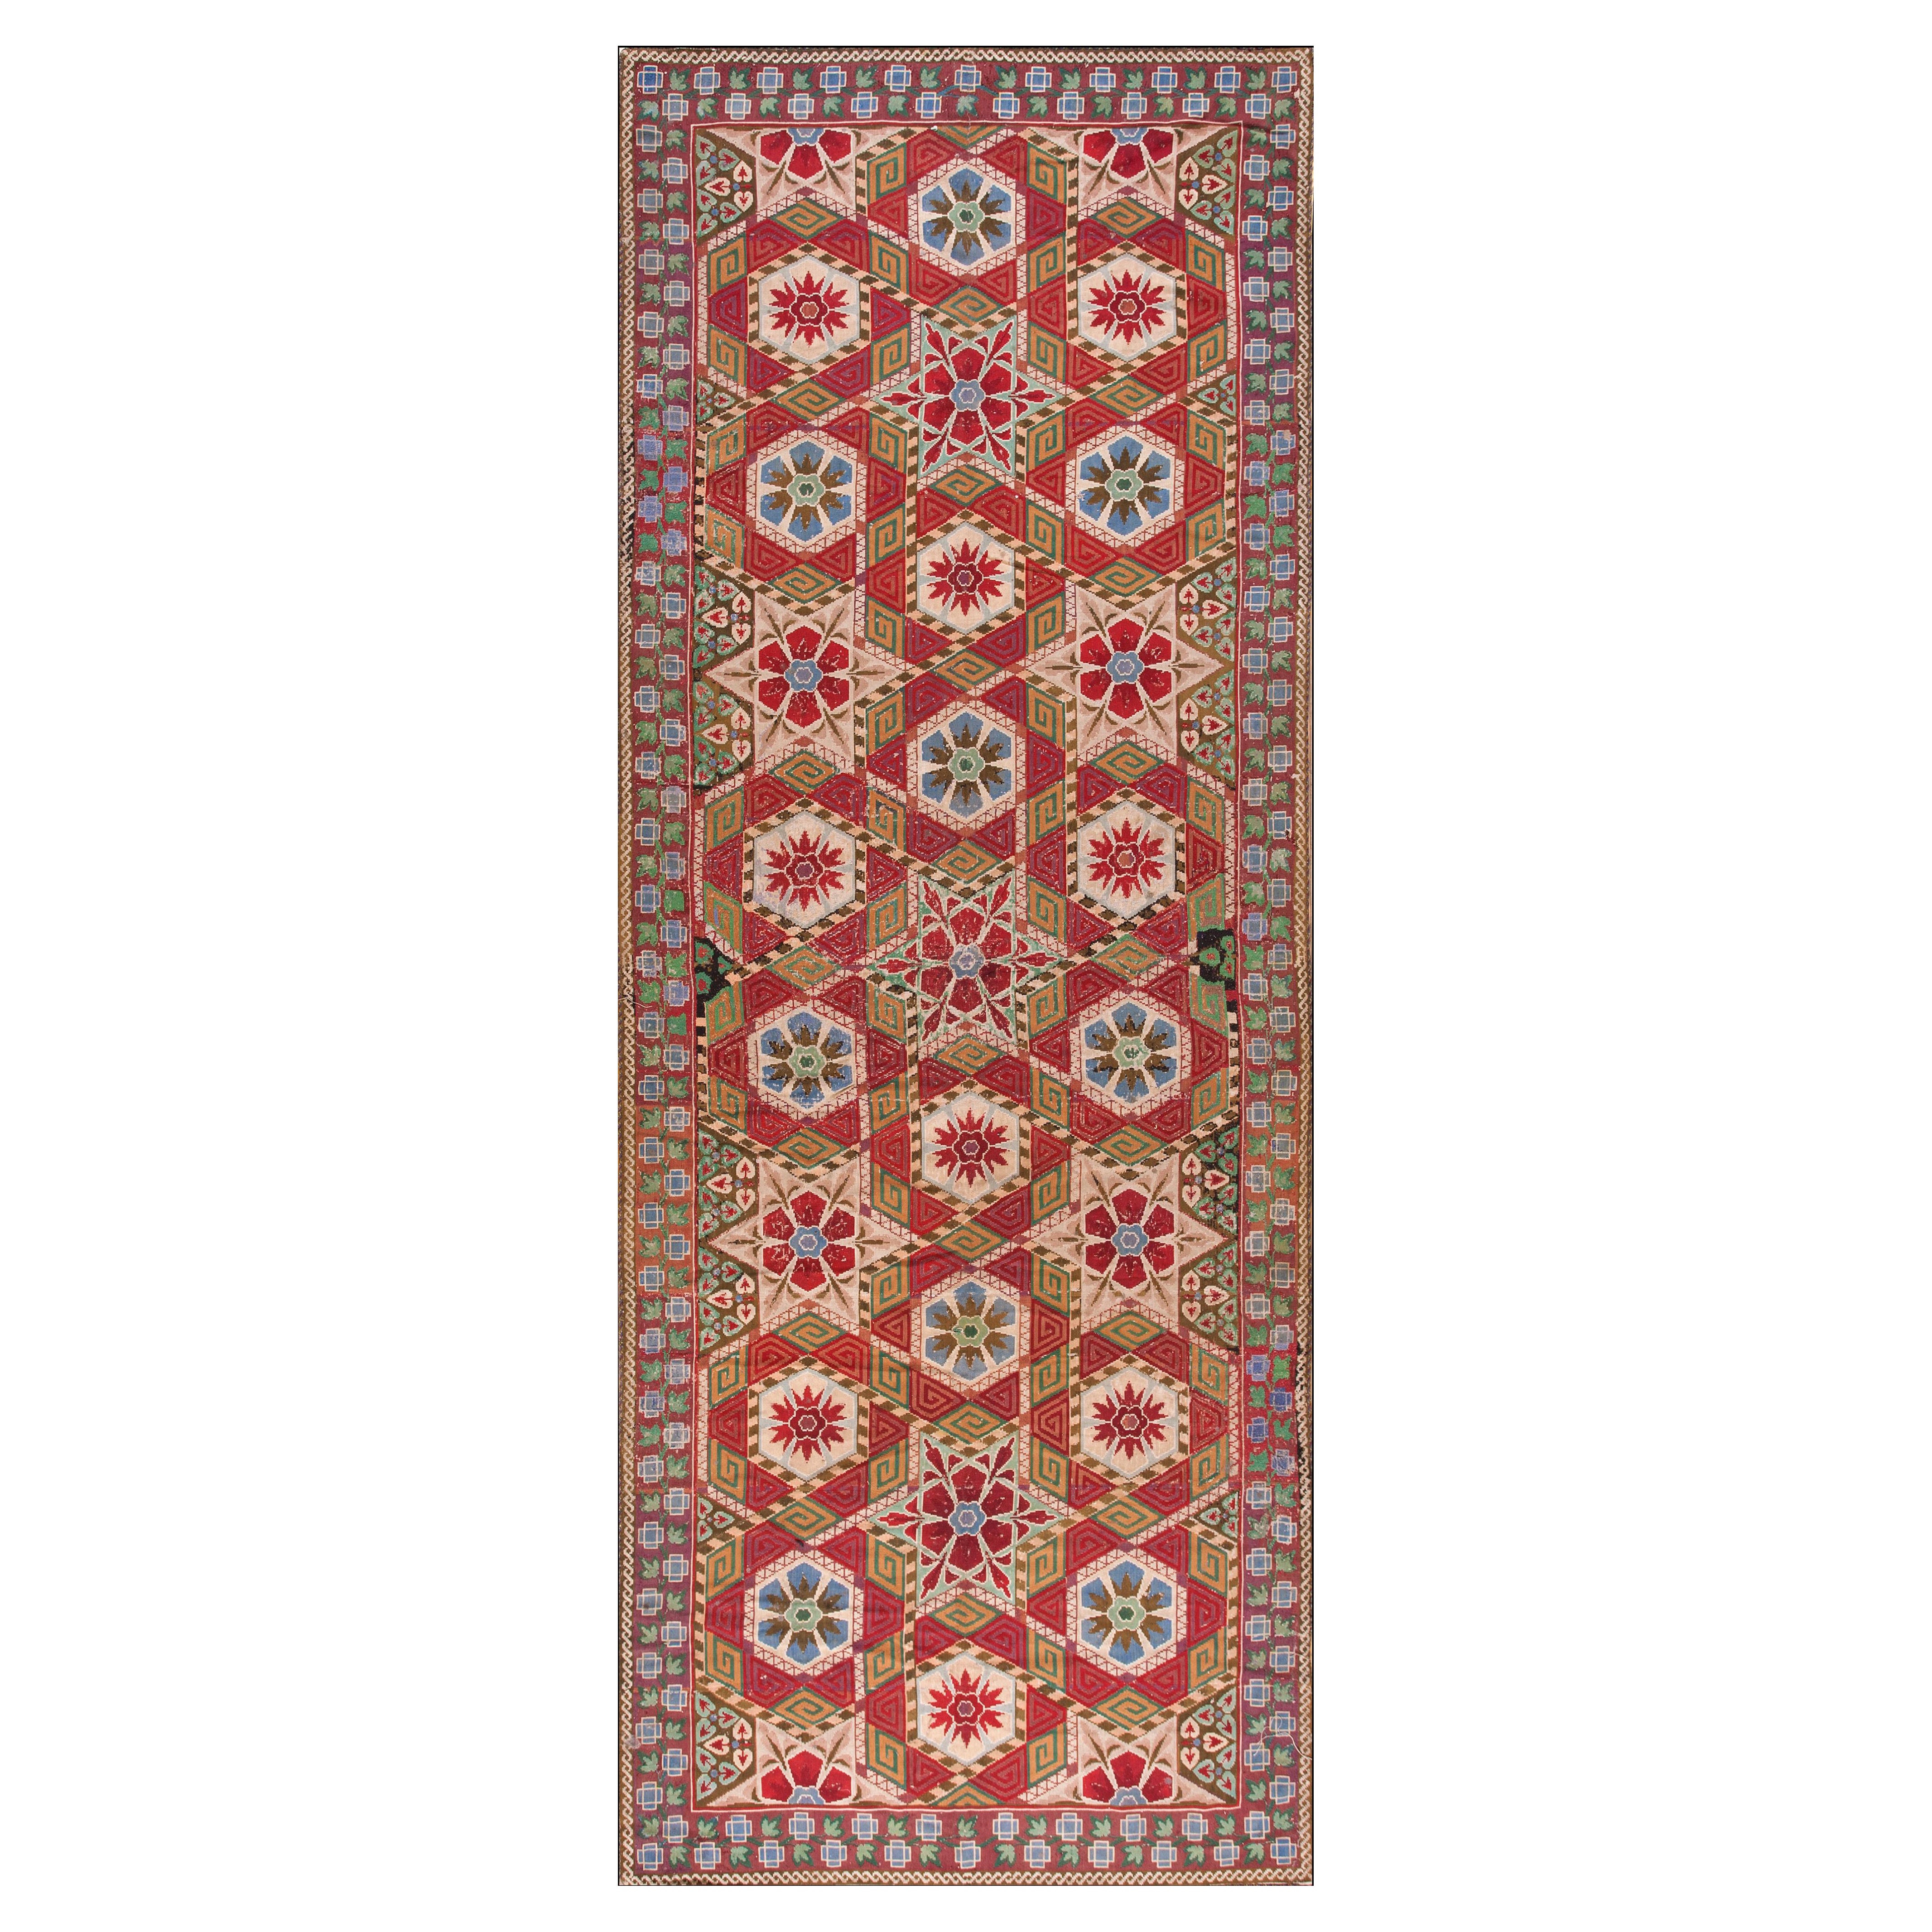 19th Century French Needlepoint Carpet ( 6' x 16' - 183 x 488 )